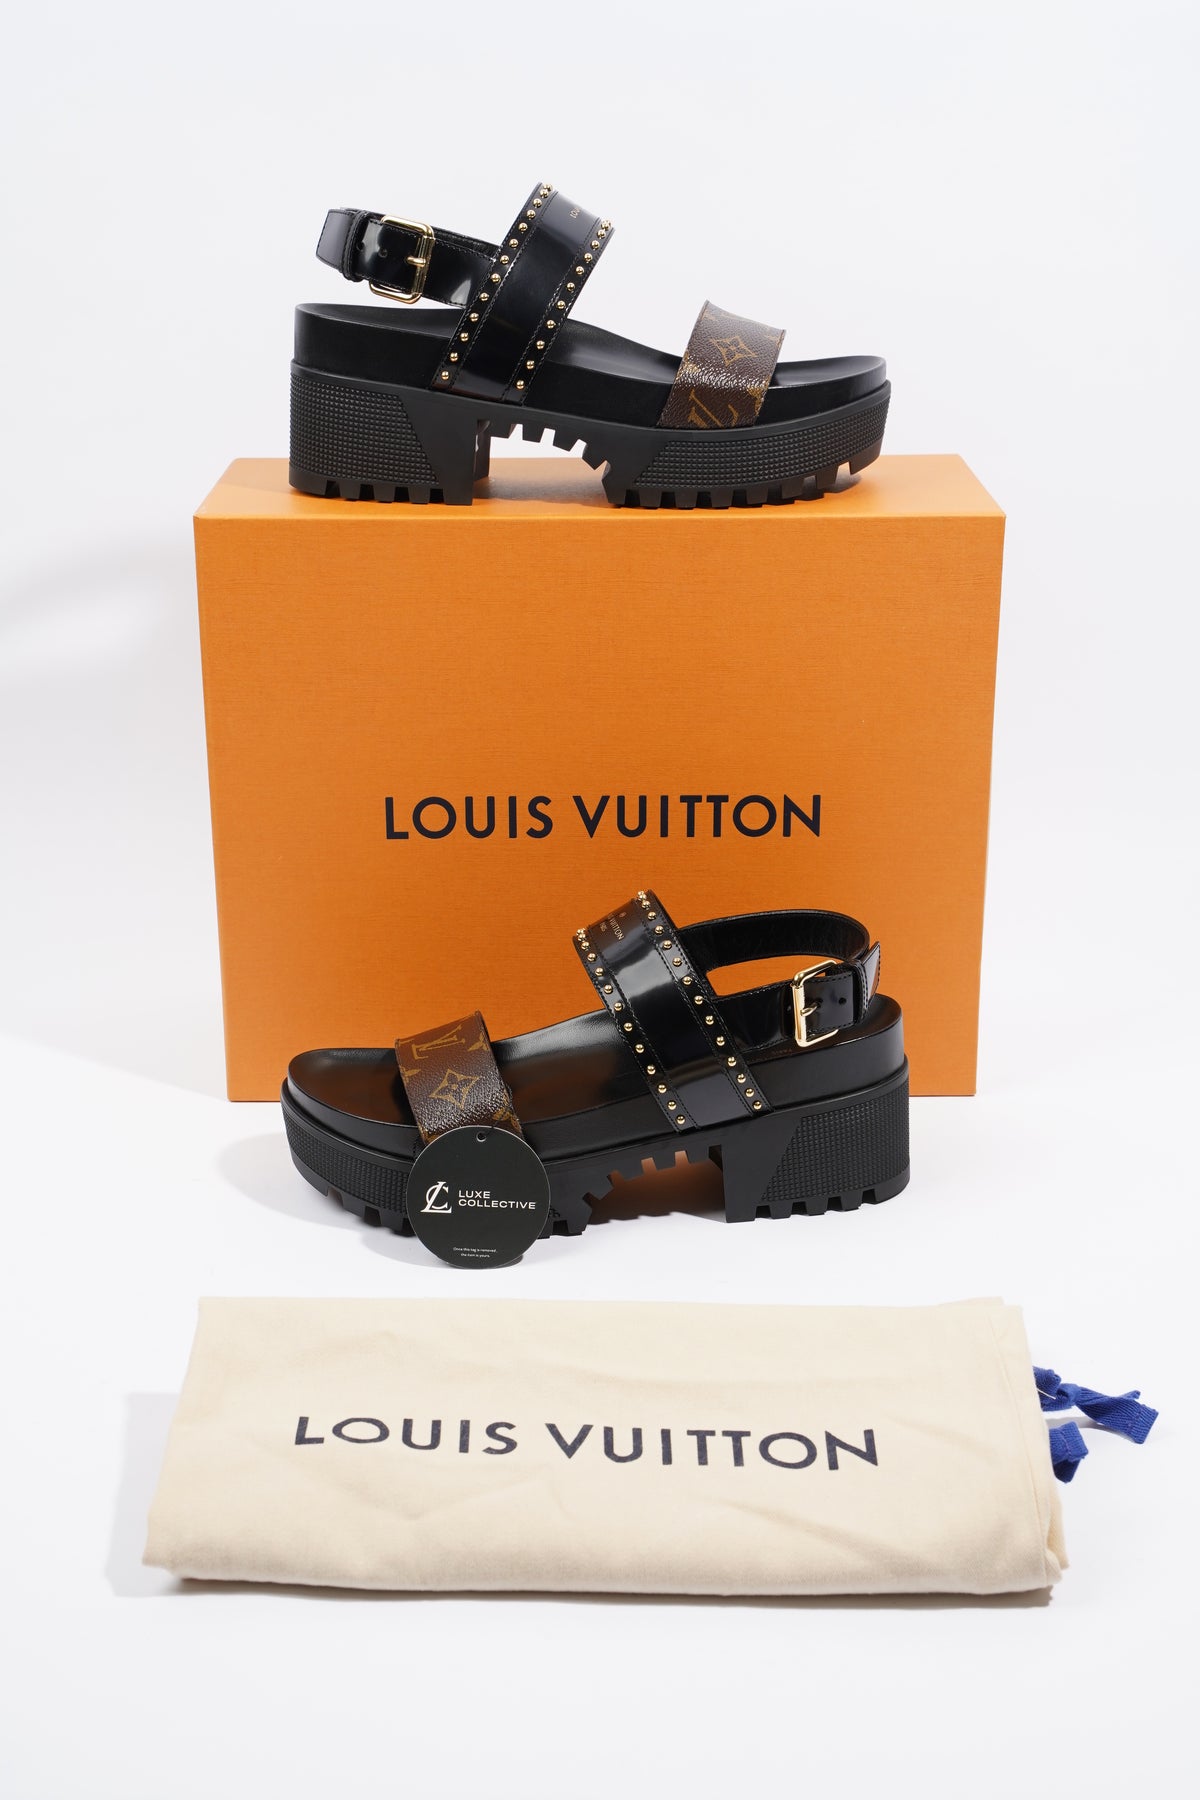 Louis Vuitton Platforms for Women - Poshmark